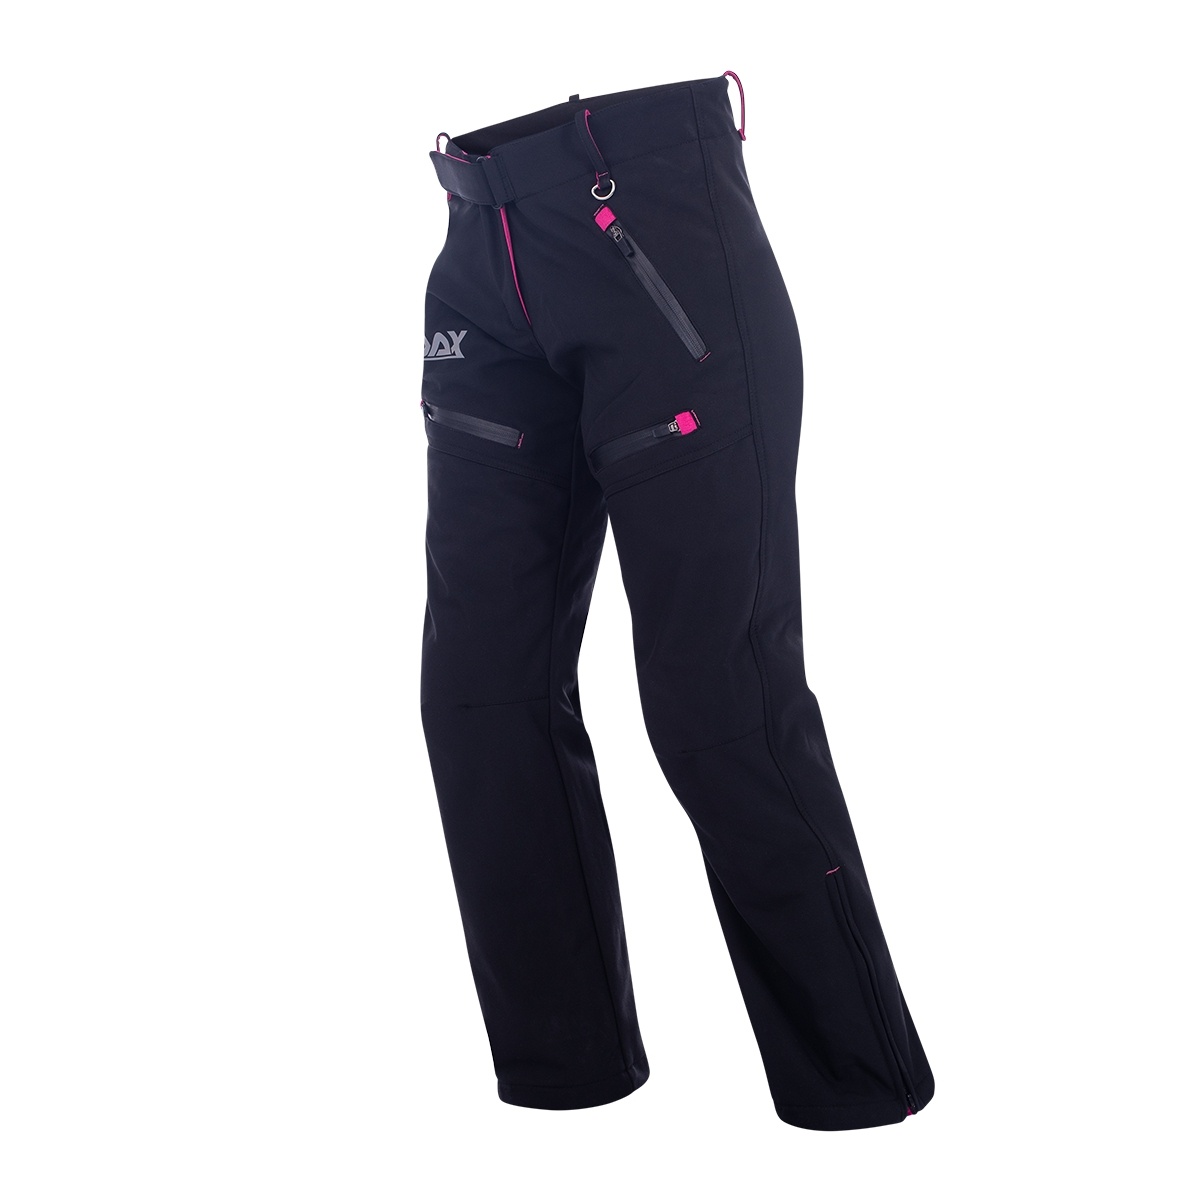 Obrázek produktu DAX LADY kalhoty XS, SoftShell, s chrániči 2870-PNT-BP-XS